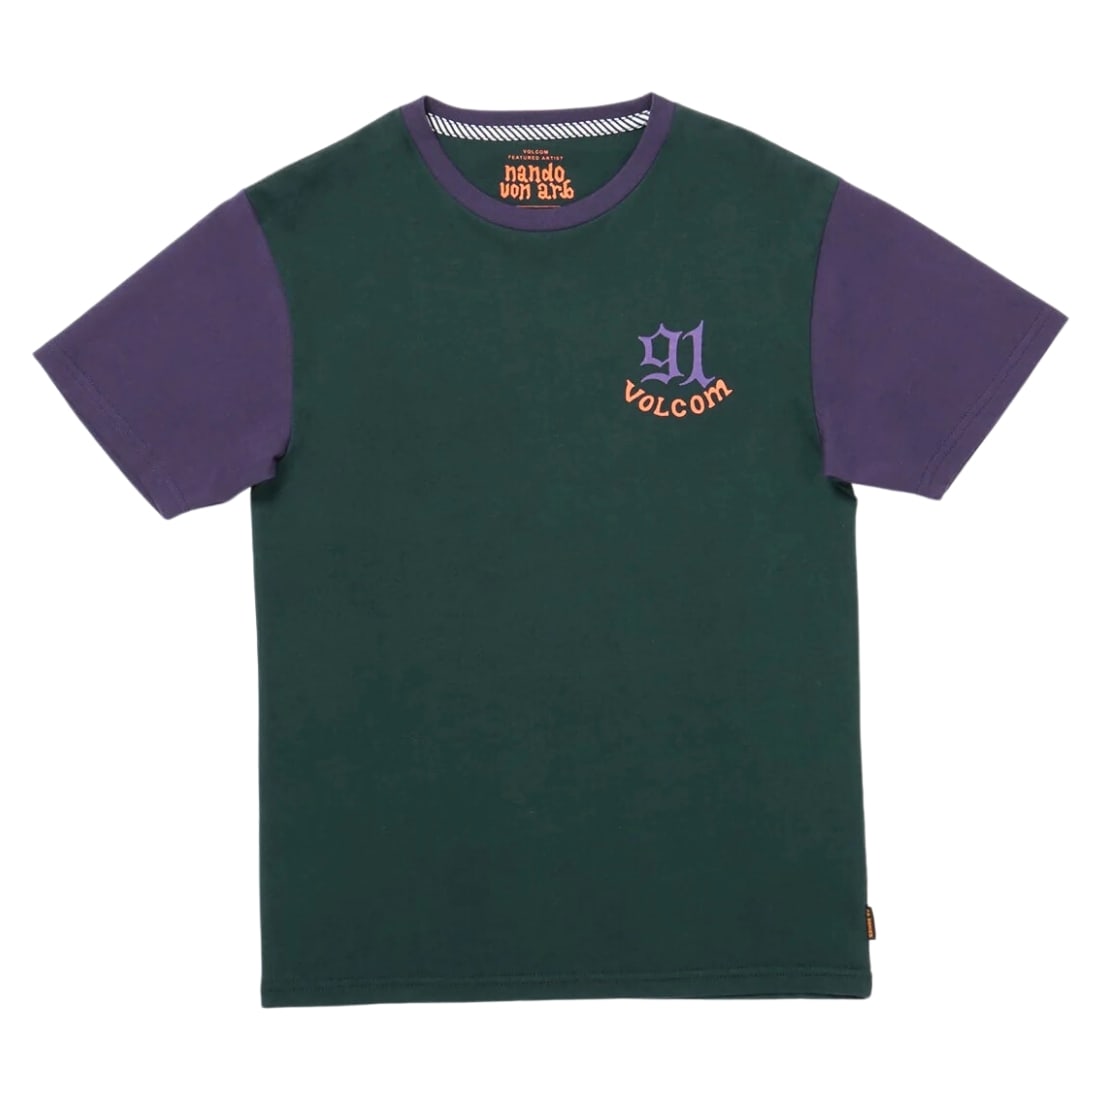 Volcom Kids Fa Nando Von Arb T-Shirt - Ponderosa Pine - Boys Skate Brand T-Shirt by Volcom